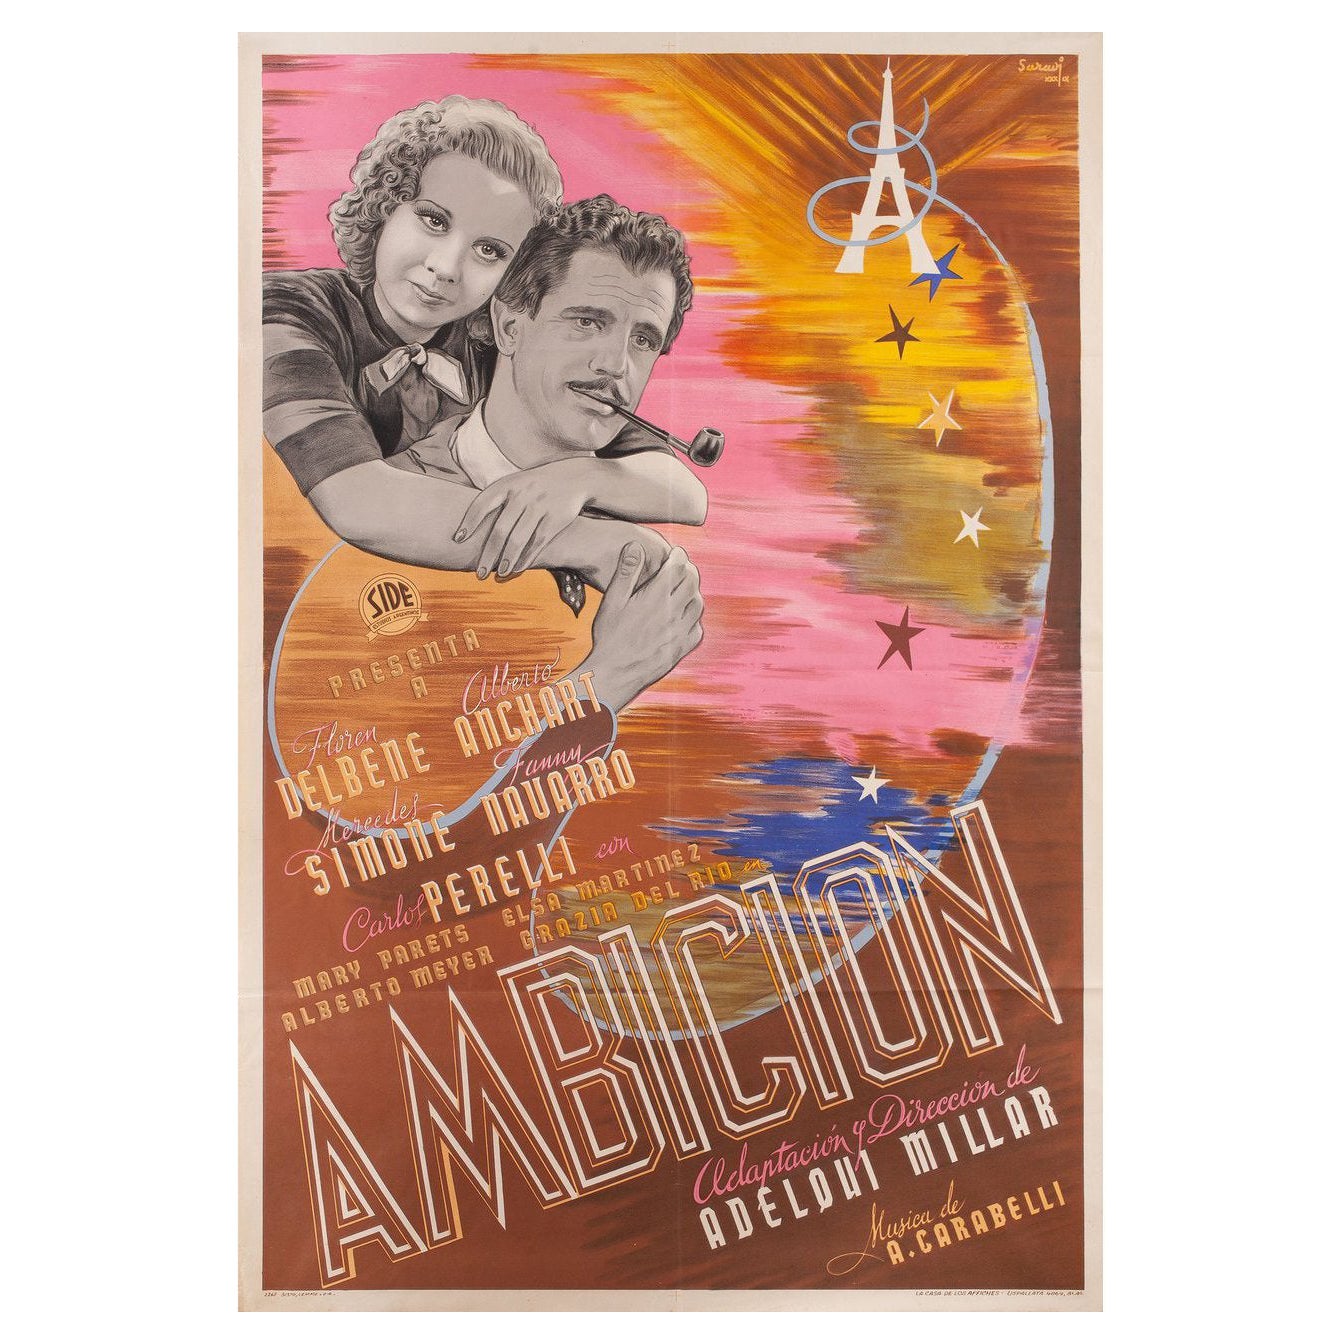 Ambicion 1939 Argentine Film Poster For Sale